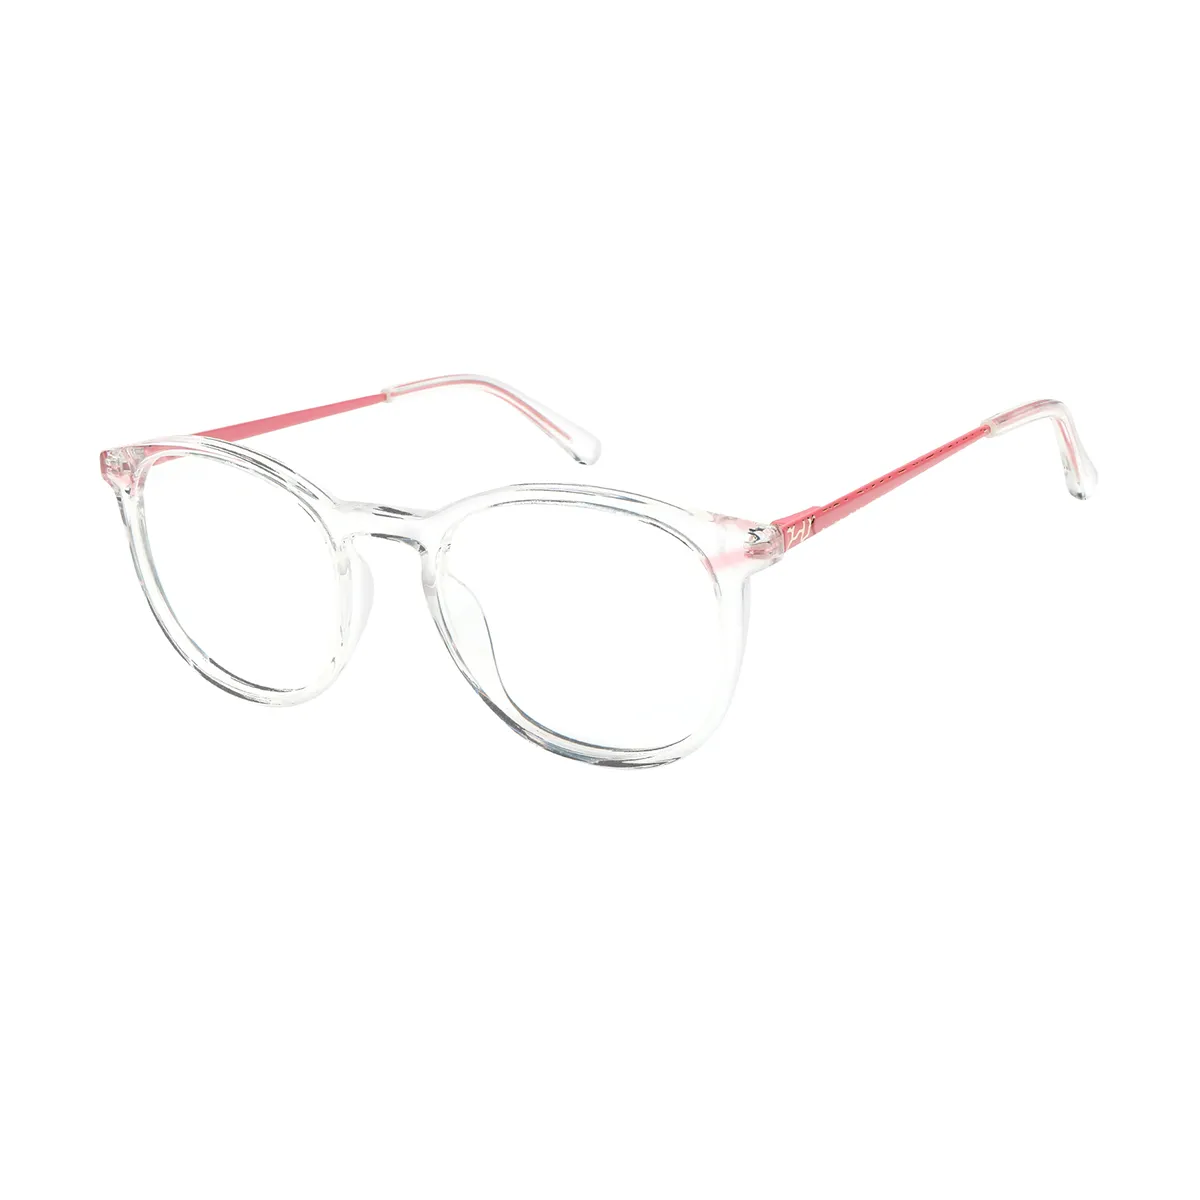 Verena - Round Translucent Glasses for Women